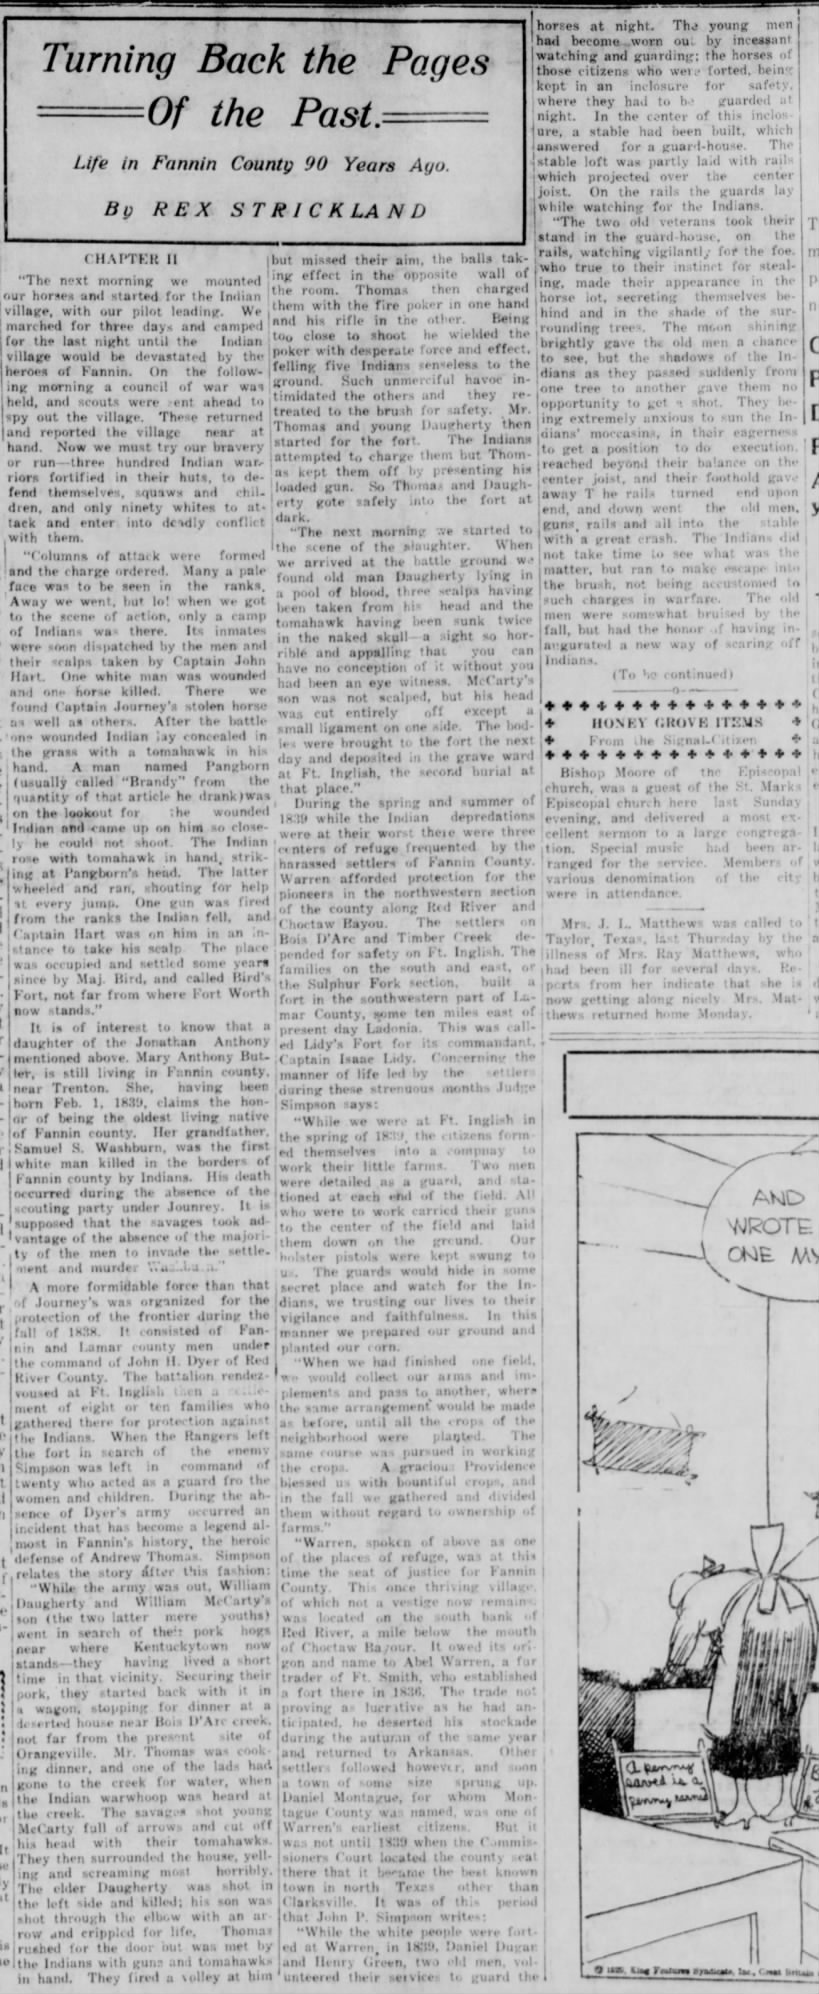 Ft. Inglish - Bonham Daily Favorite - Mar 1, 1929